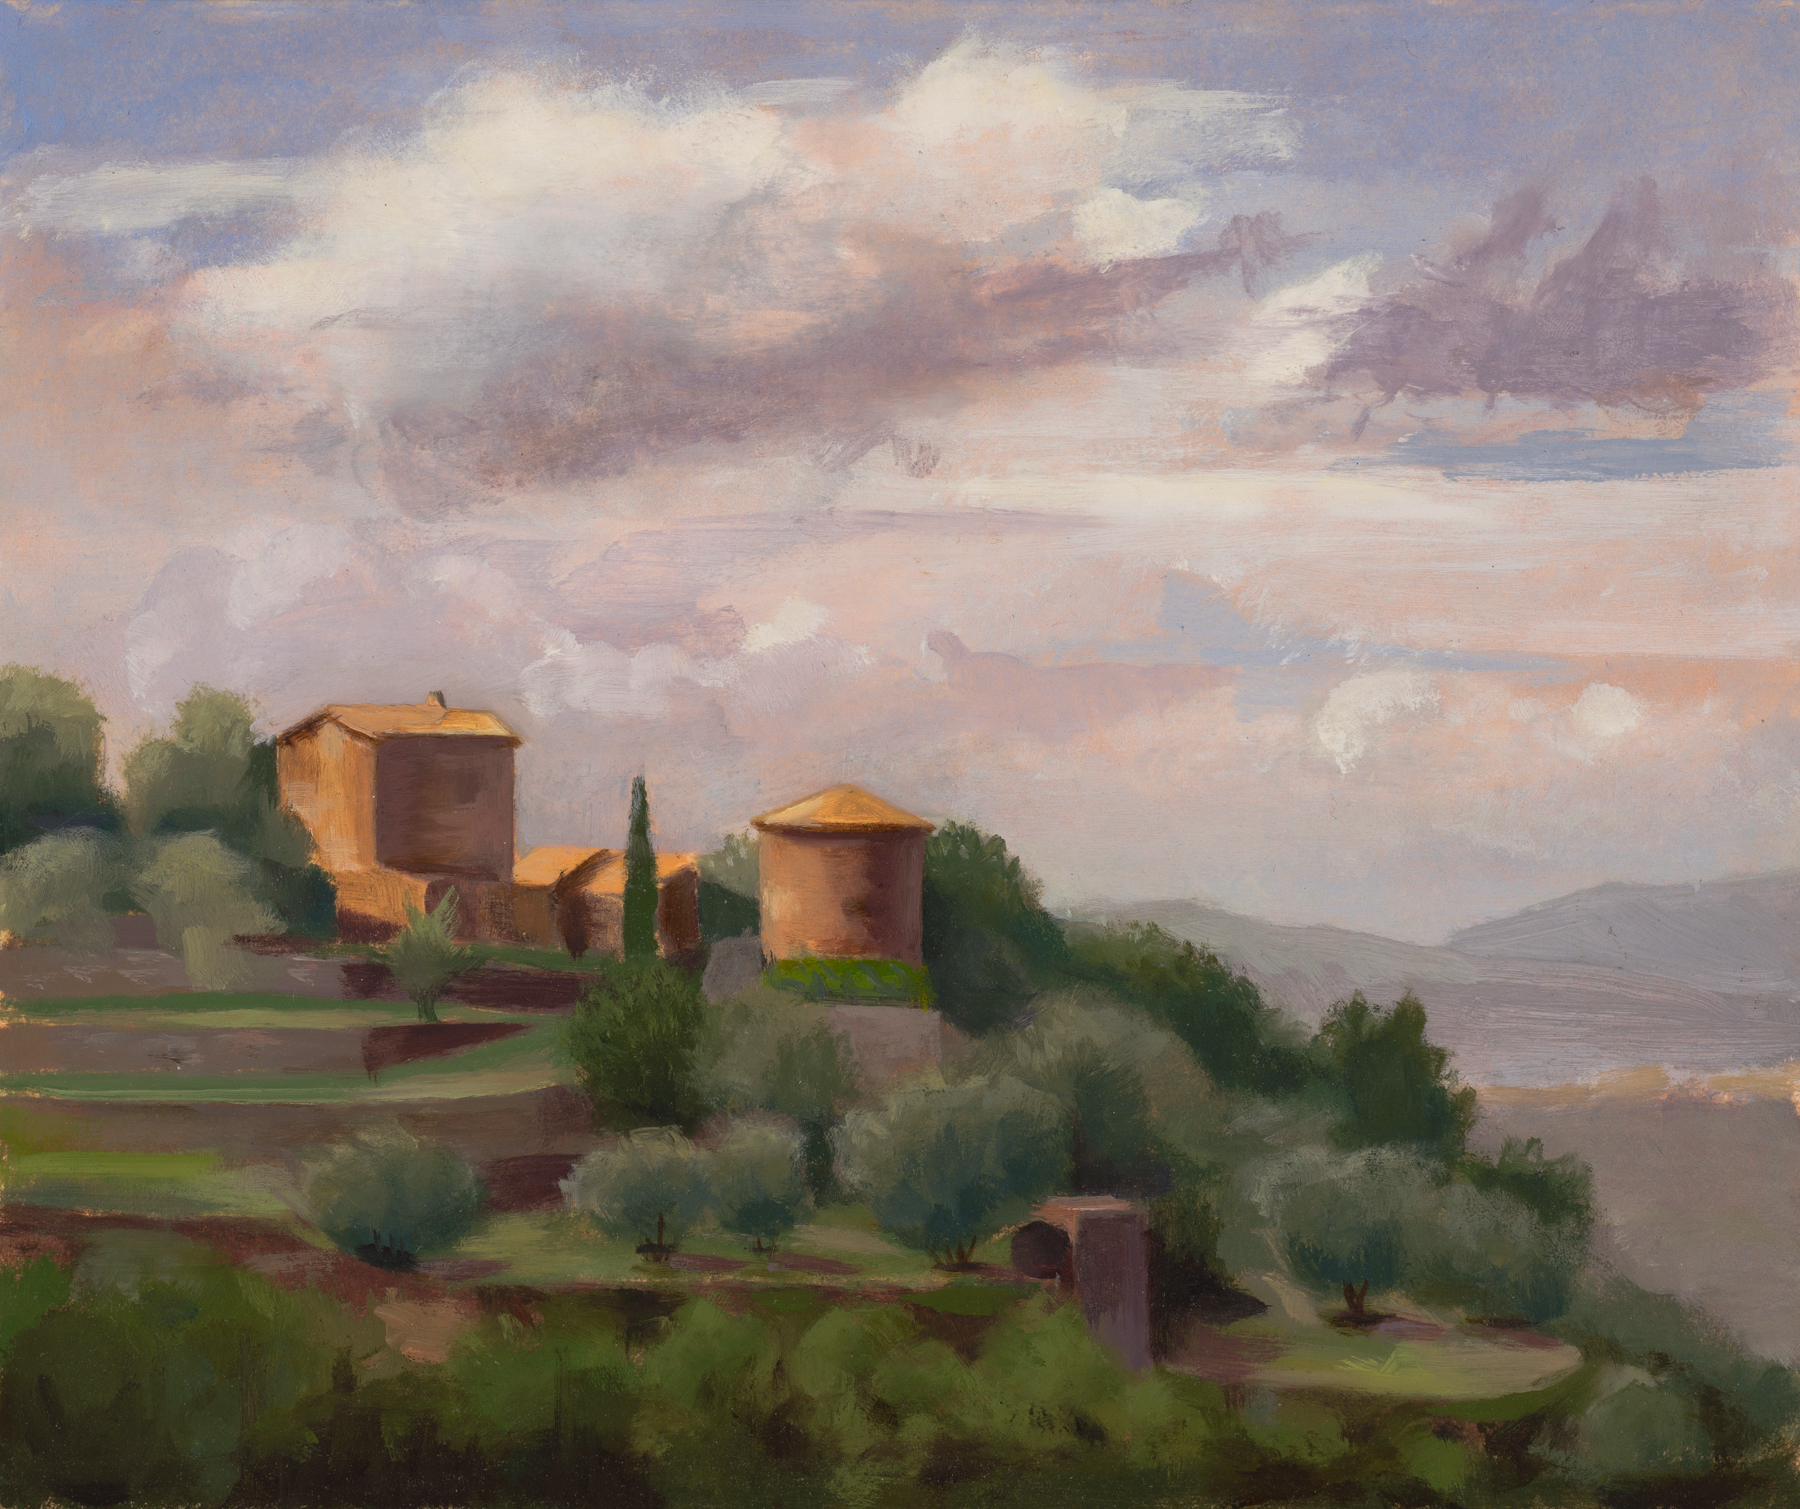 View of Montalcino